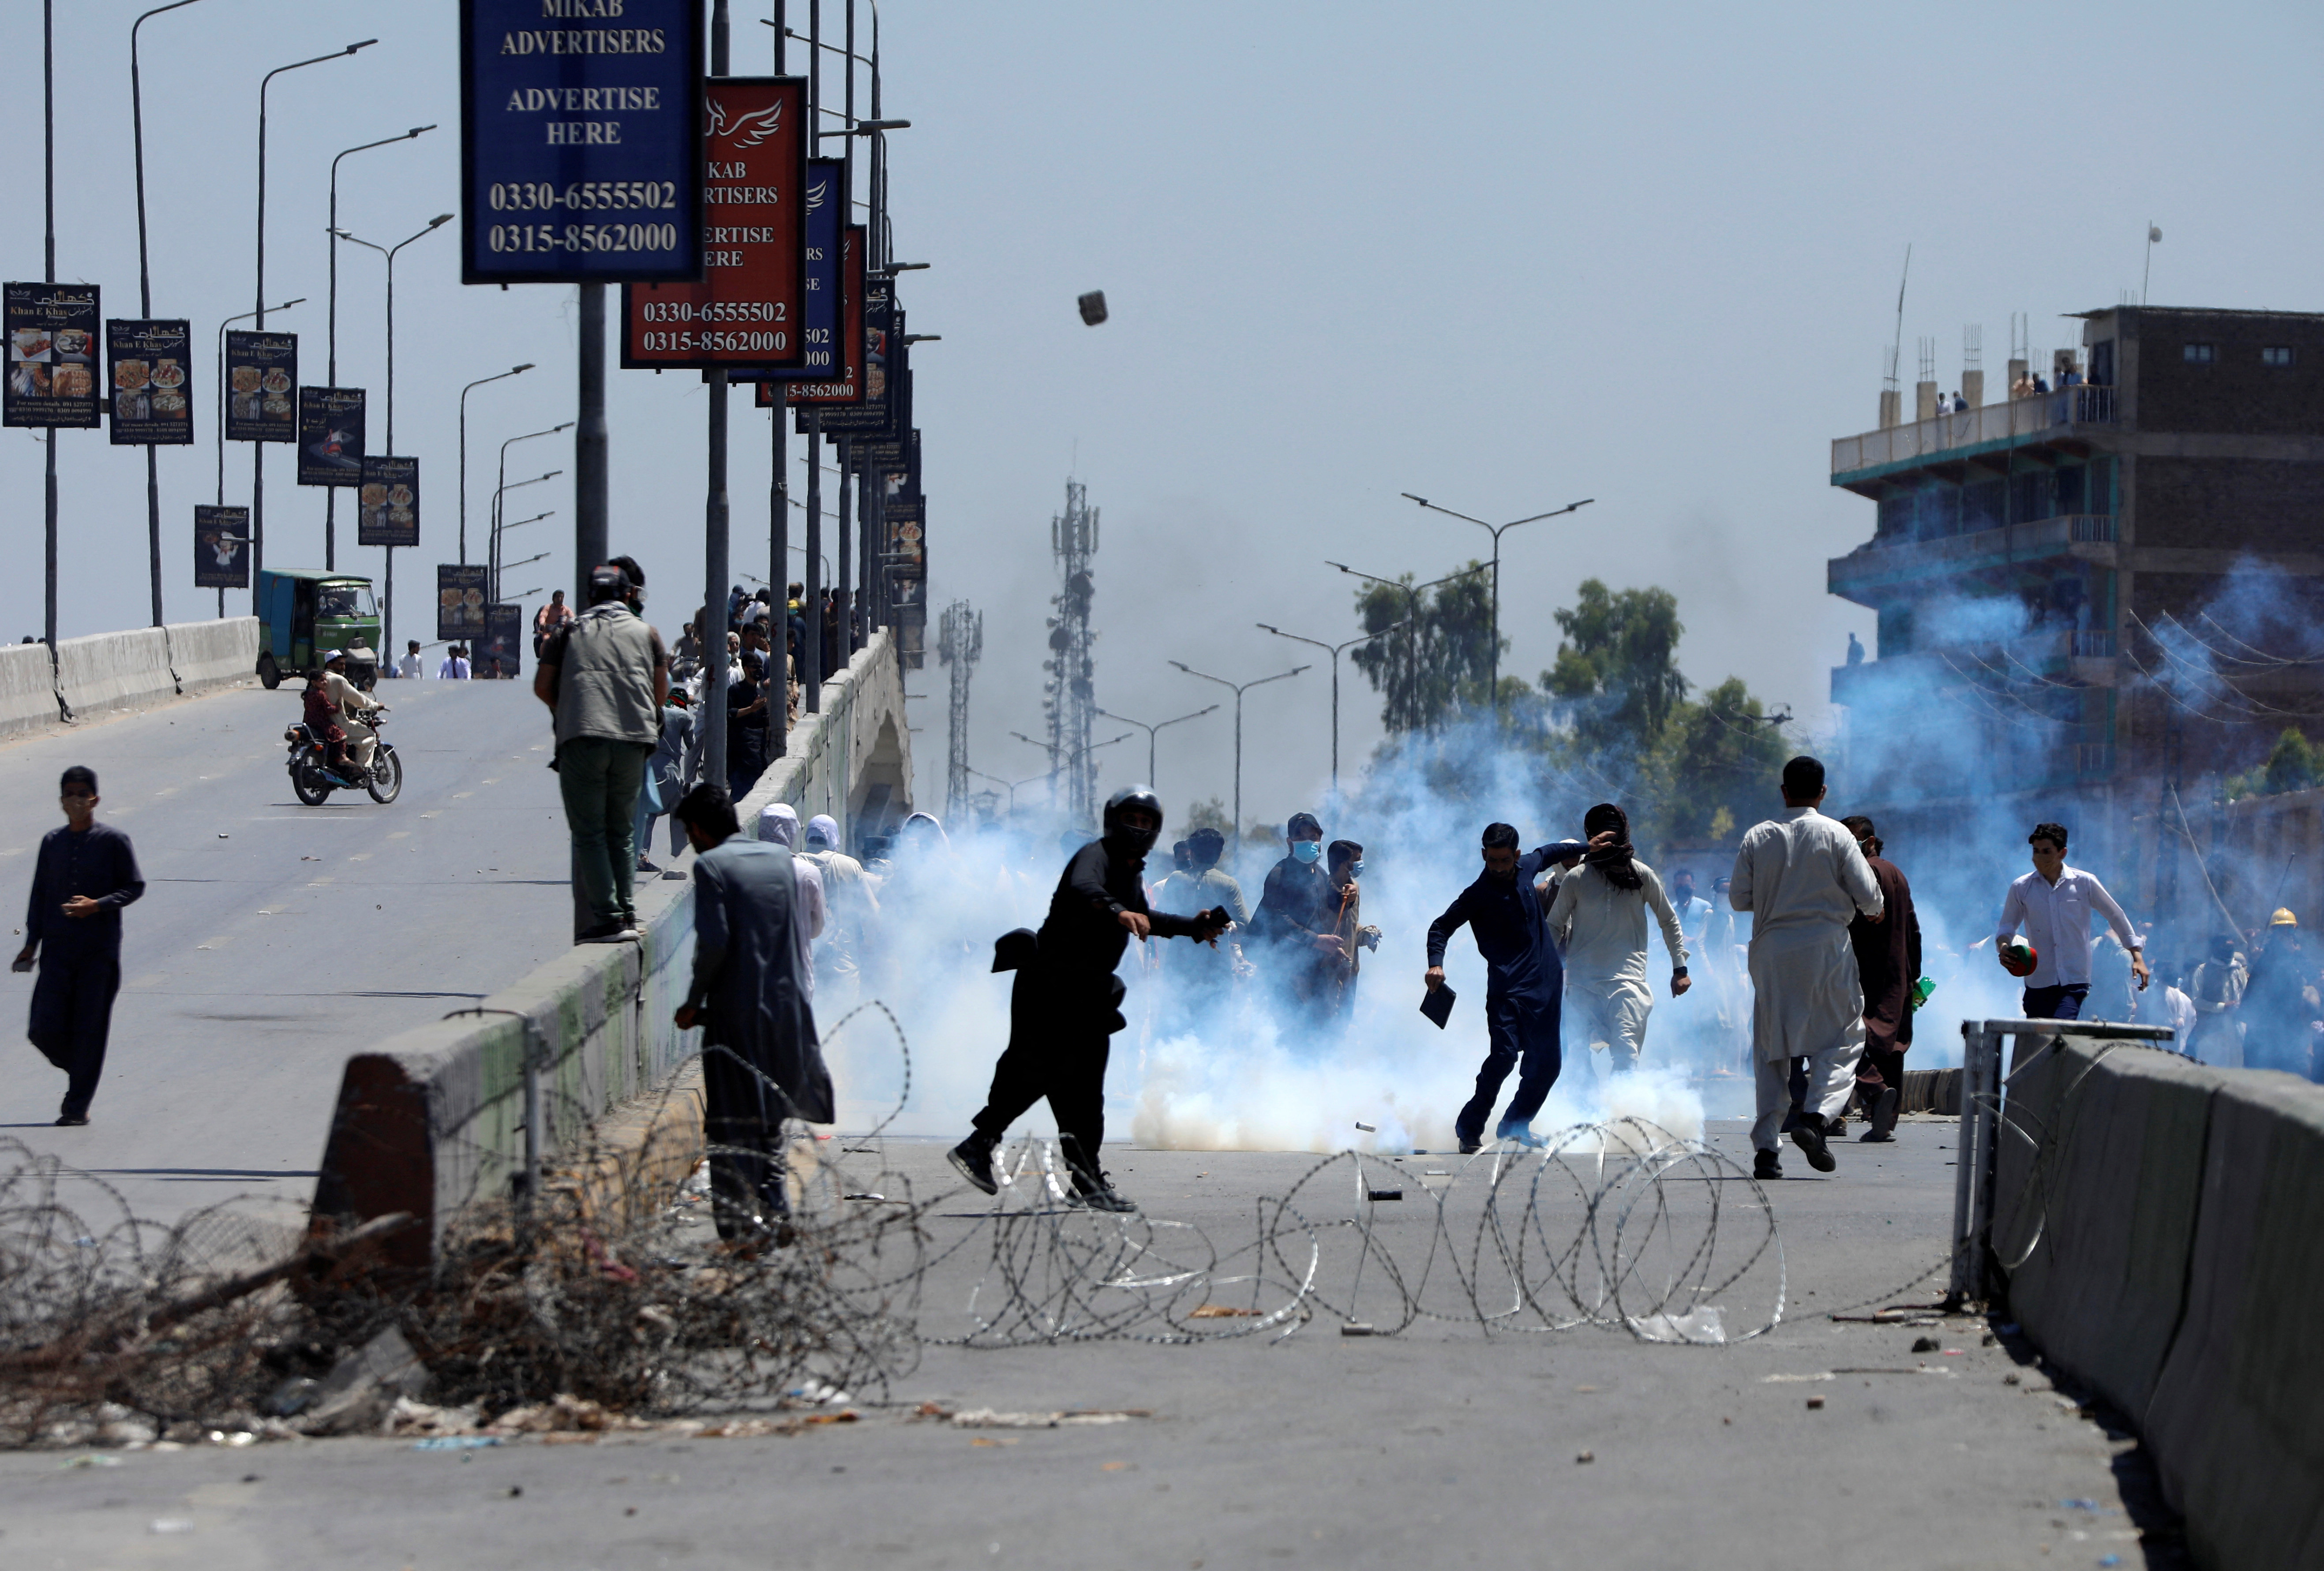 A non-political discussion on politics of agitation | The Express Tribune